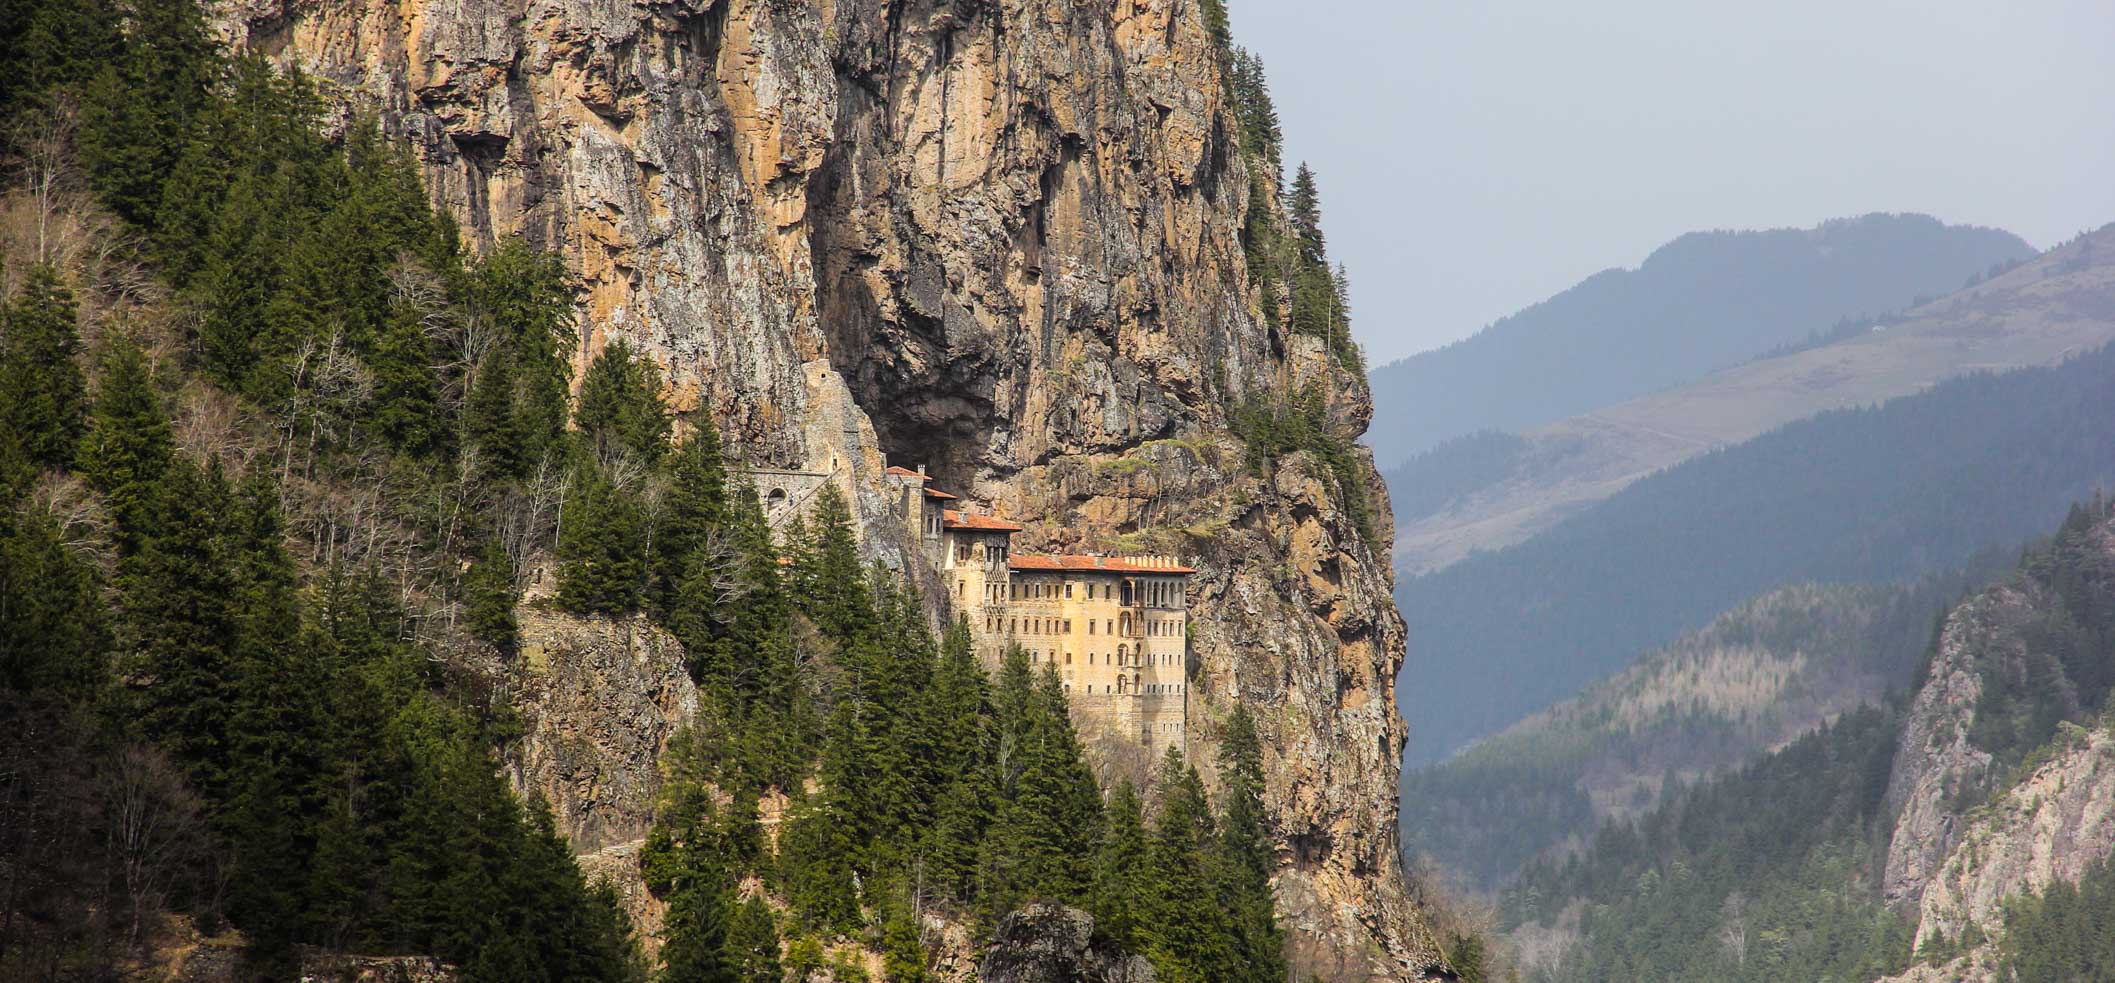 Sumela Monastery in turkey